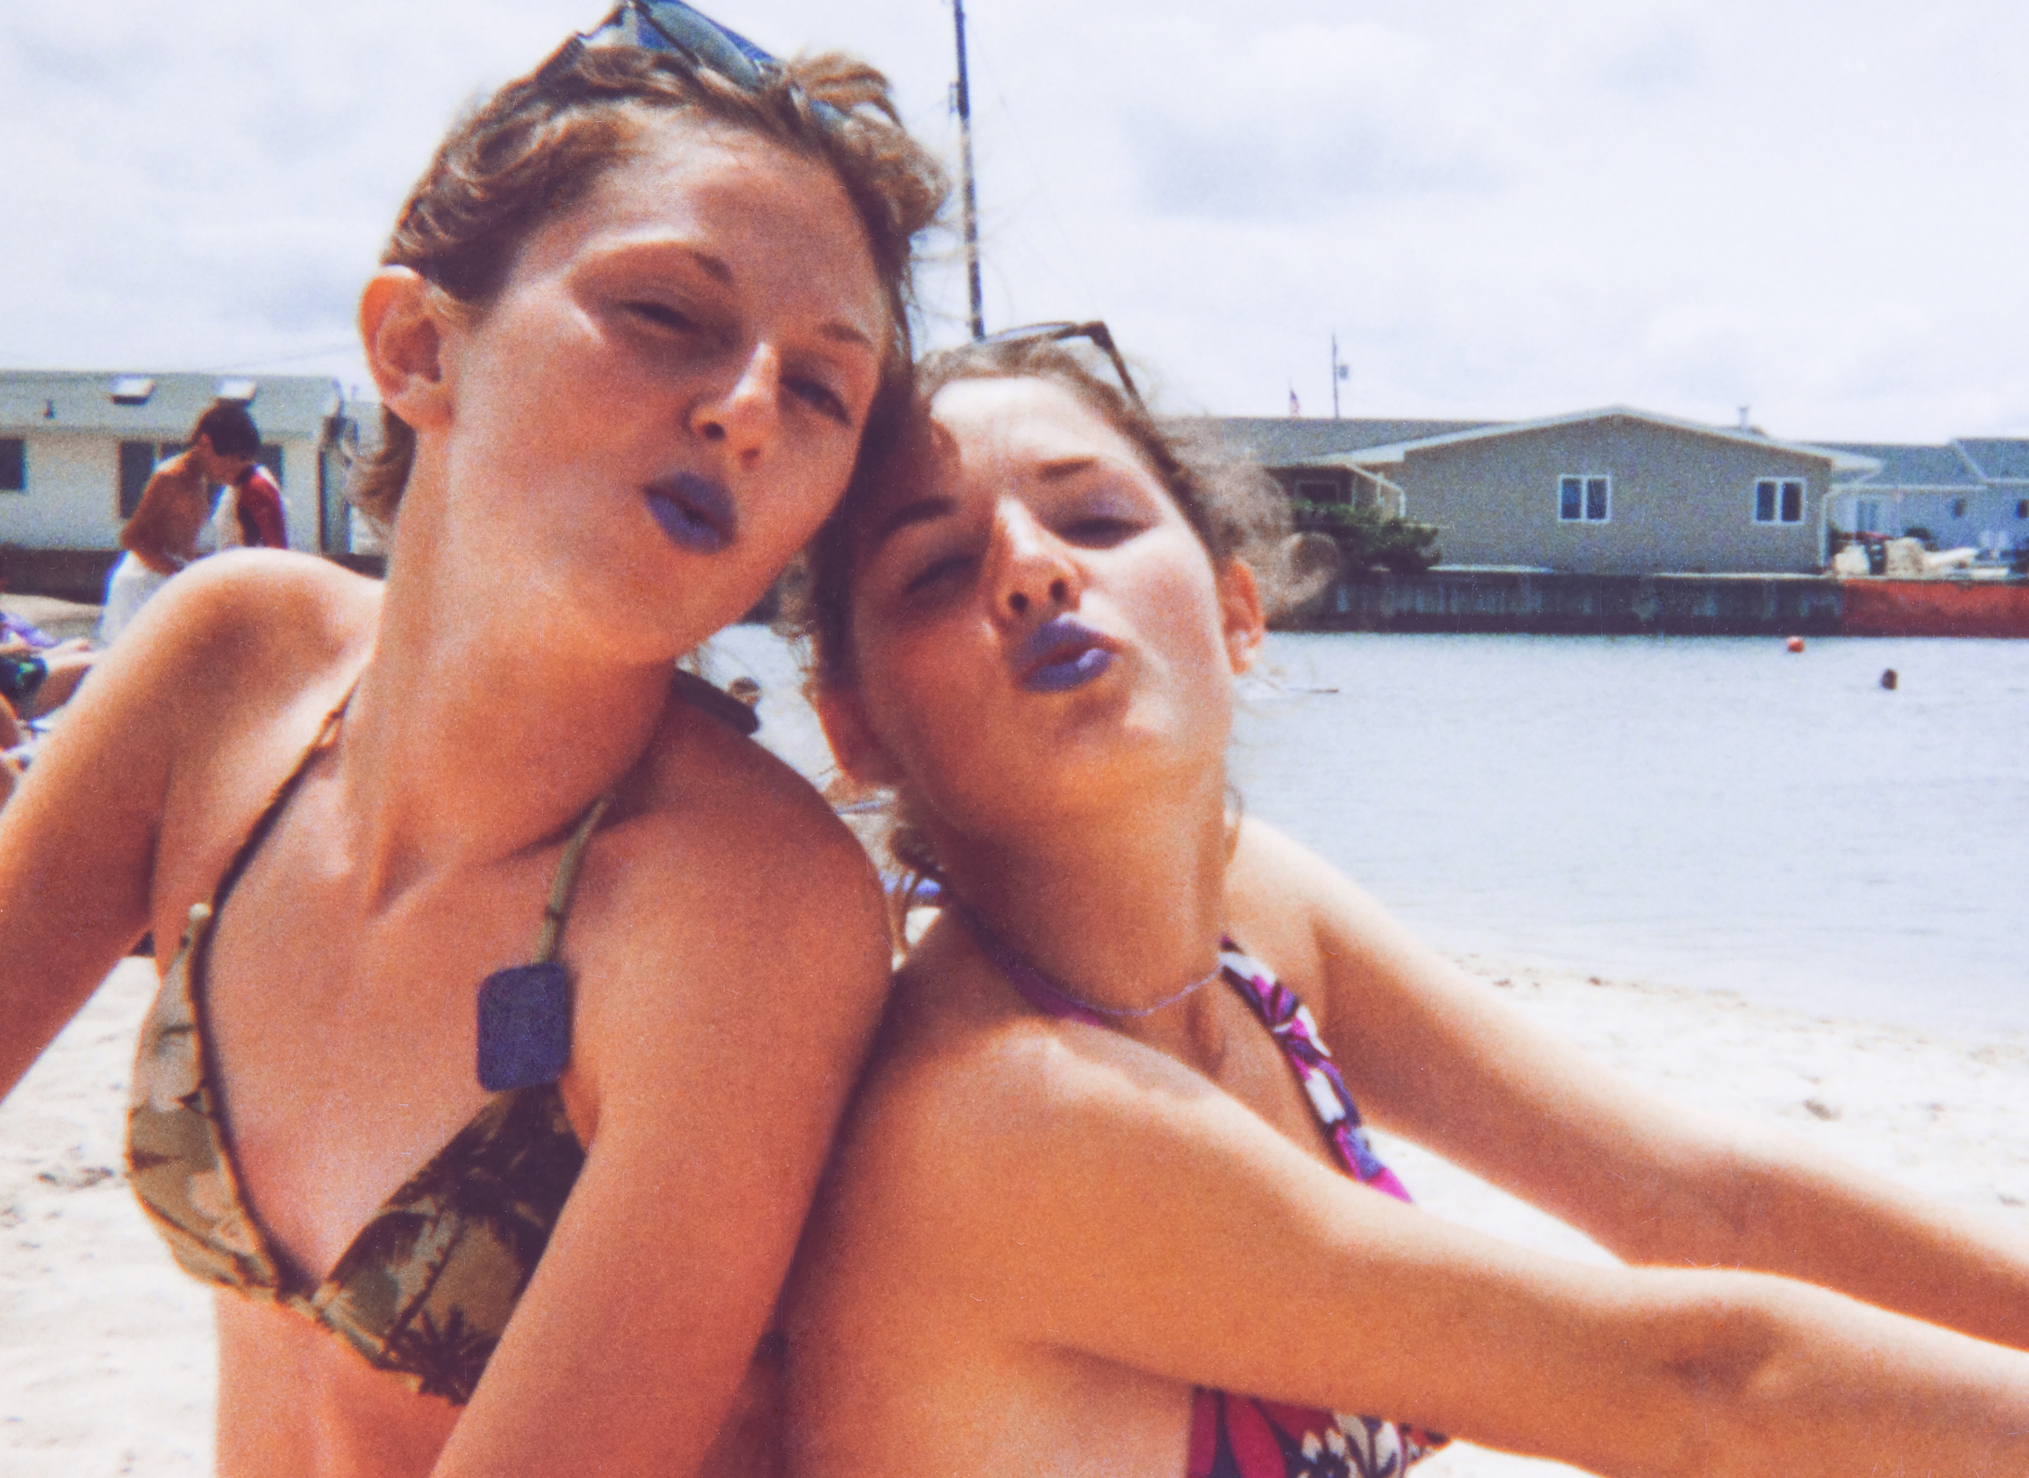 Two individuals posing cheek-to-cheek in swimwear, making playful expressions